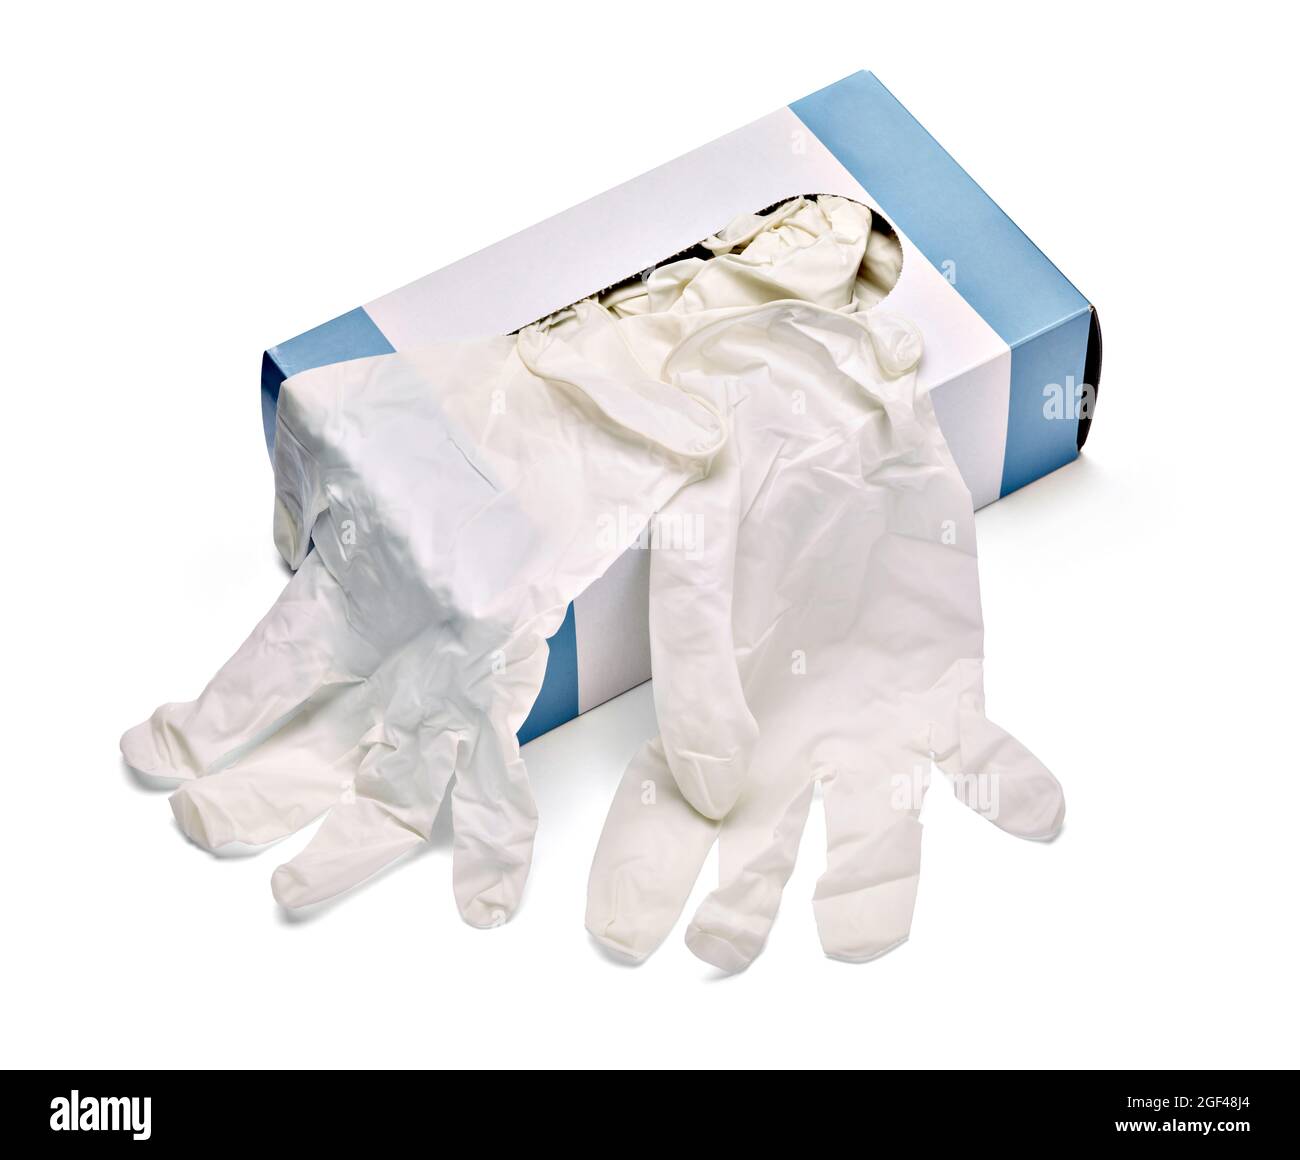 Caja de guantes quirúrgicos Imágenes recortadas de stock - Alamy